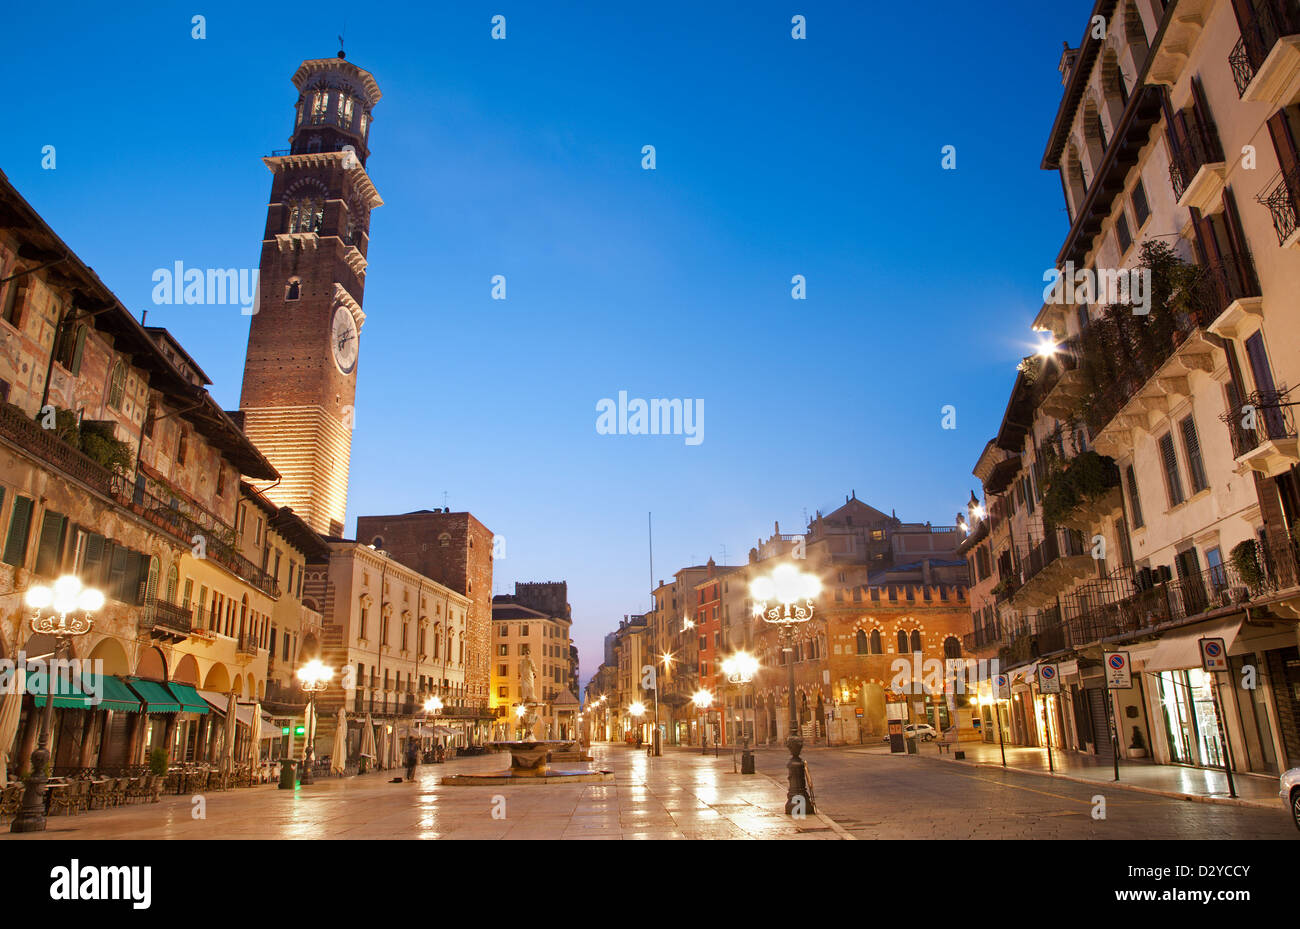 Verona - Piazza Erbe in dusk Stock Photo